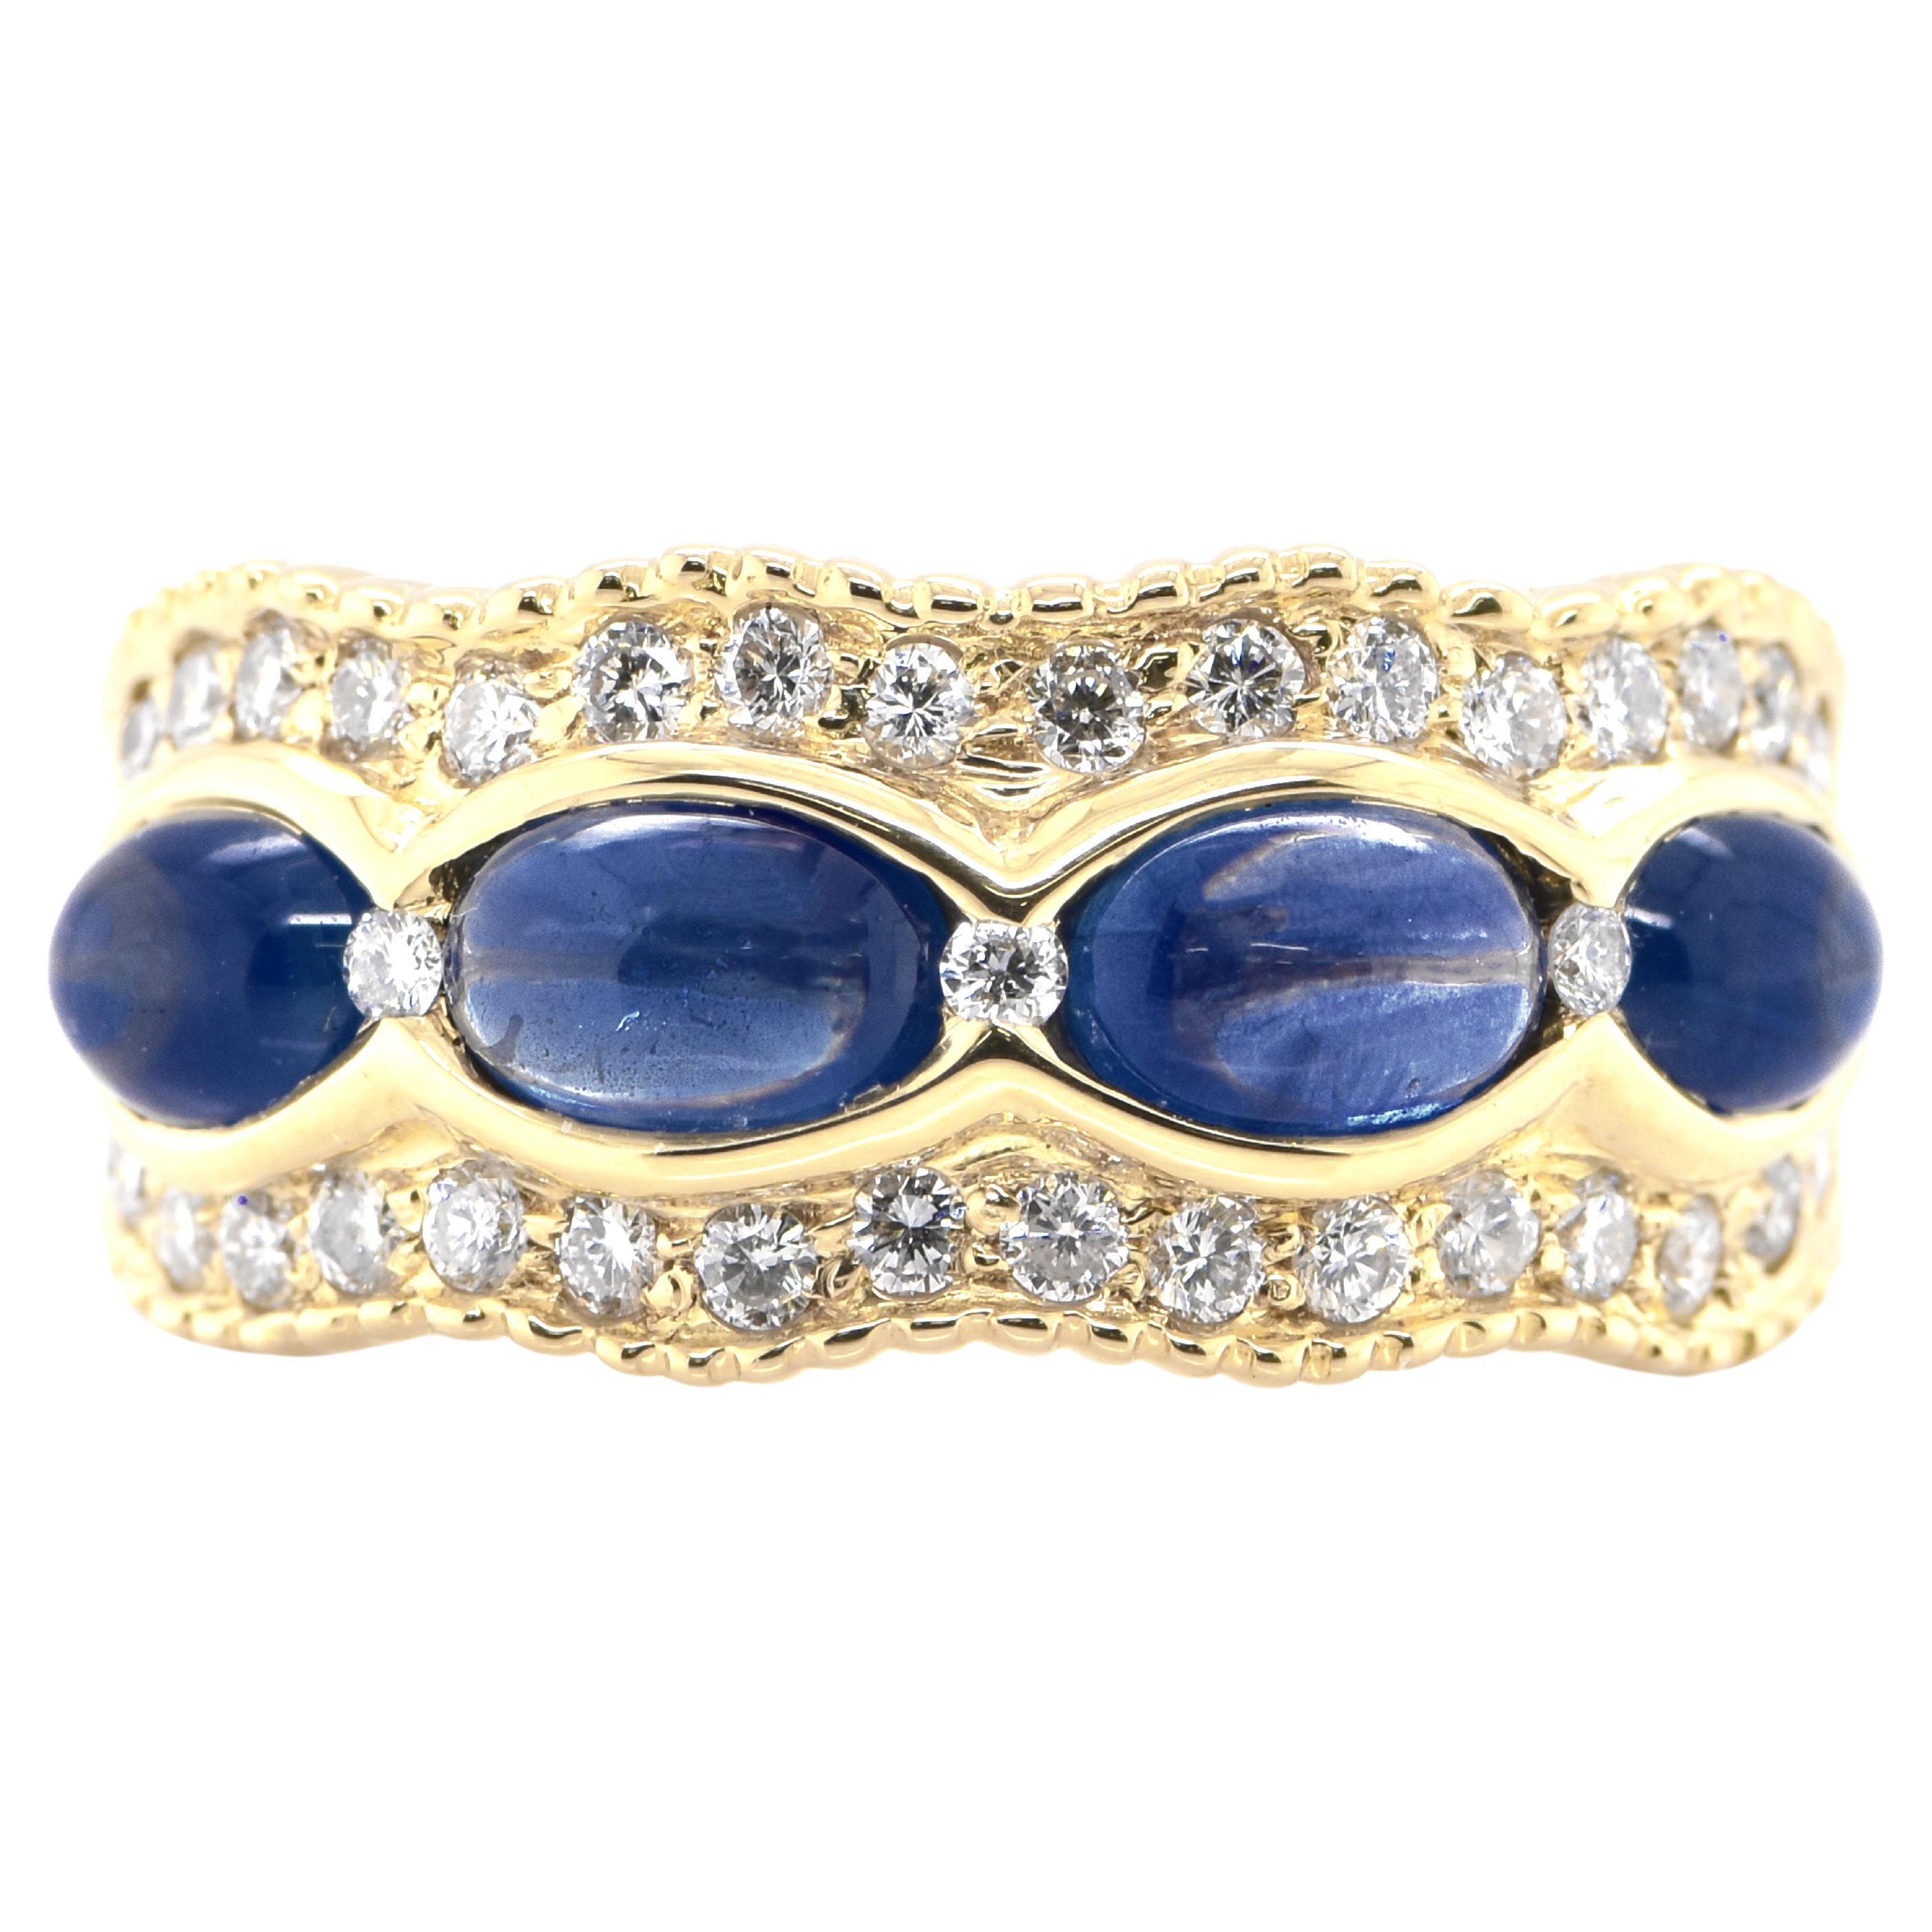 2.95 Carat Natural Cabochon Sapphires and Diamond Half Eternity Band Ring